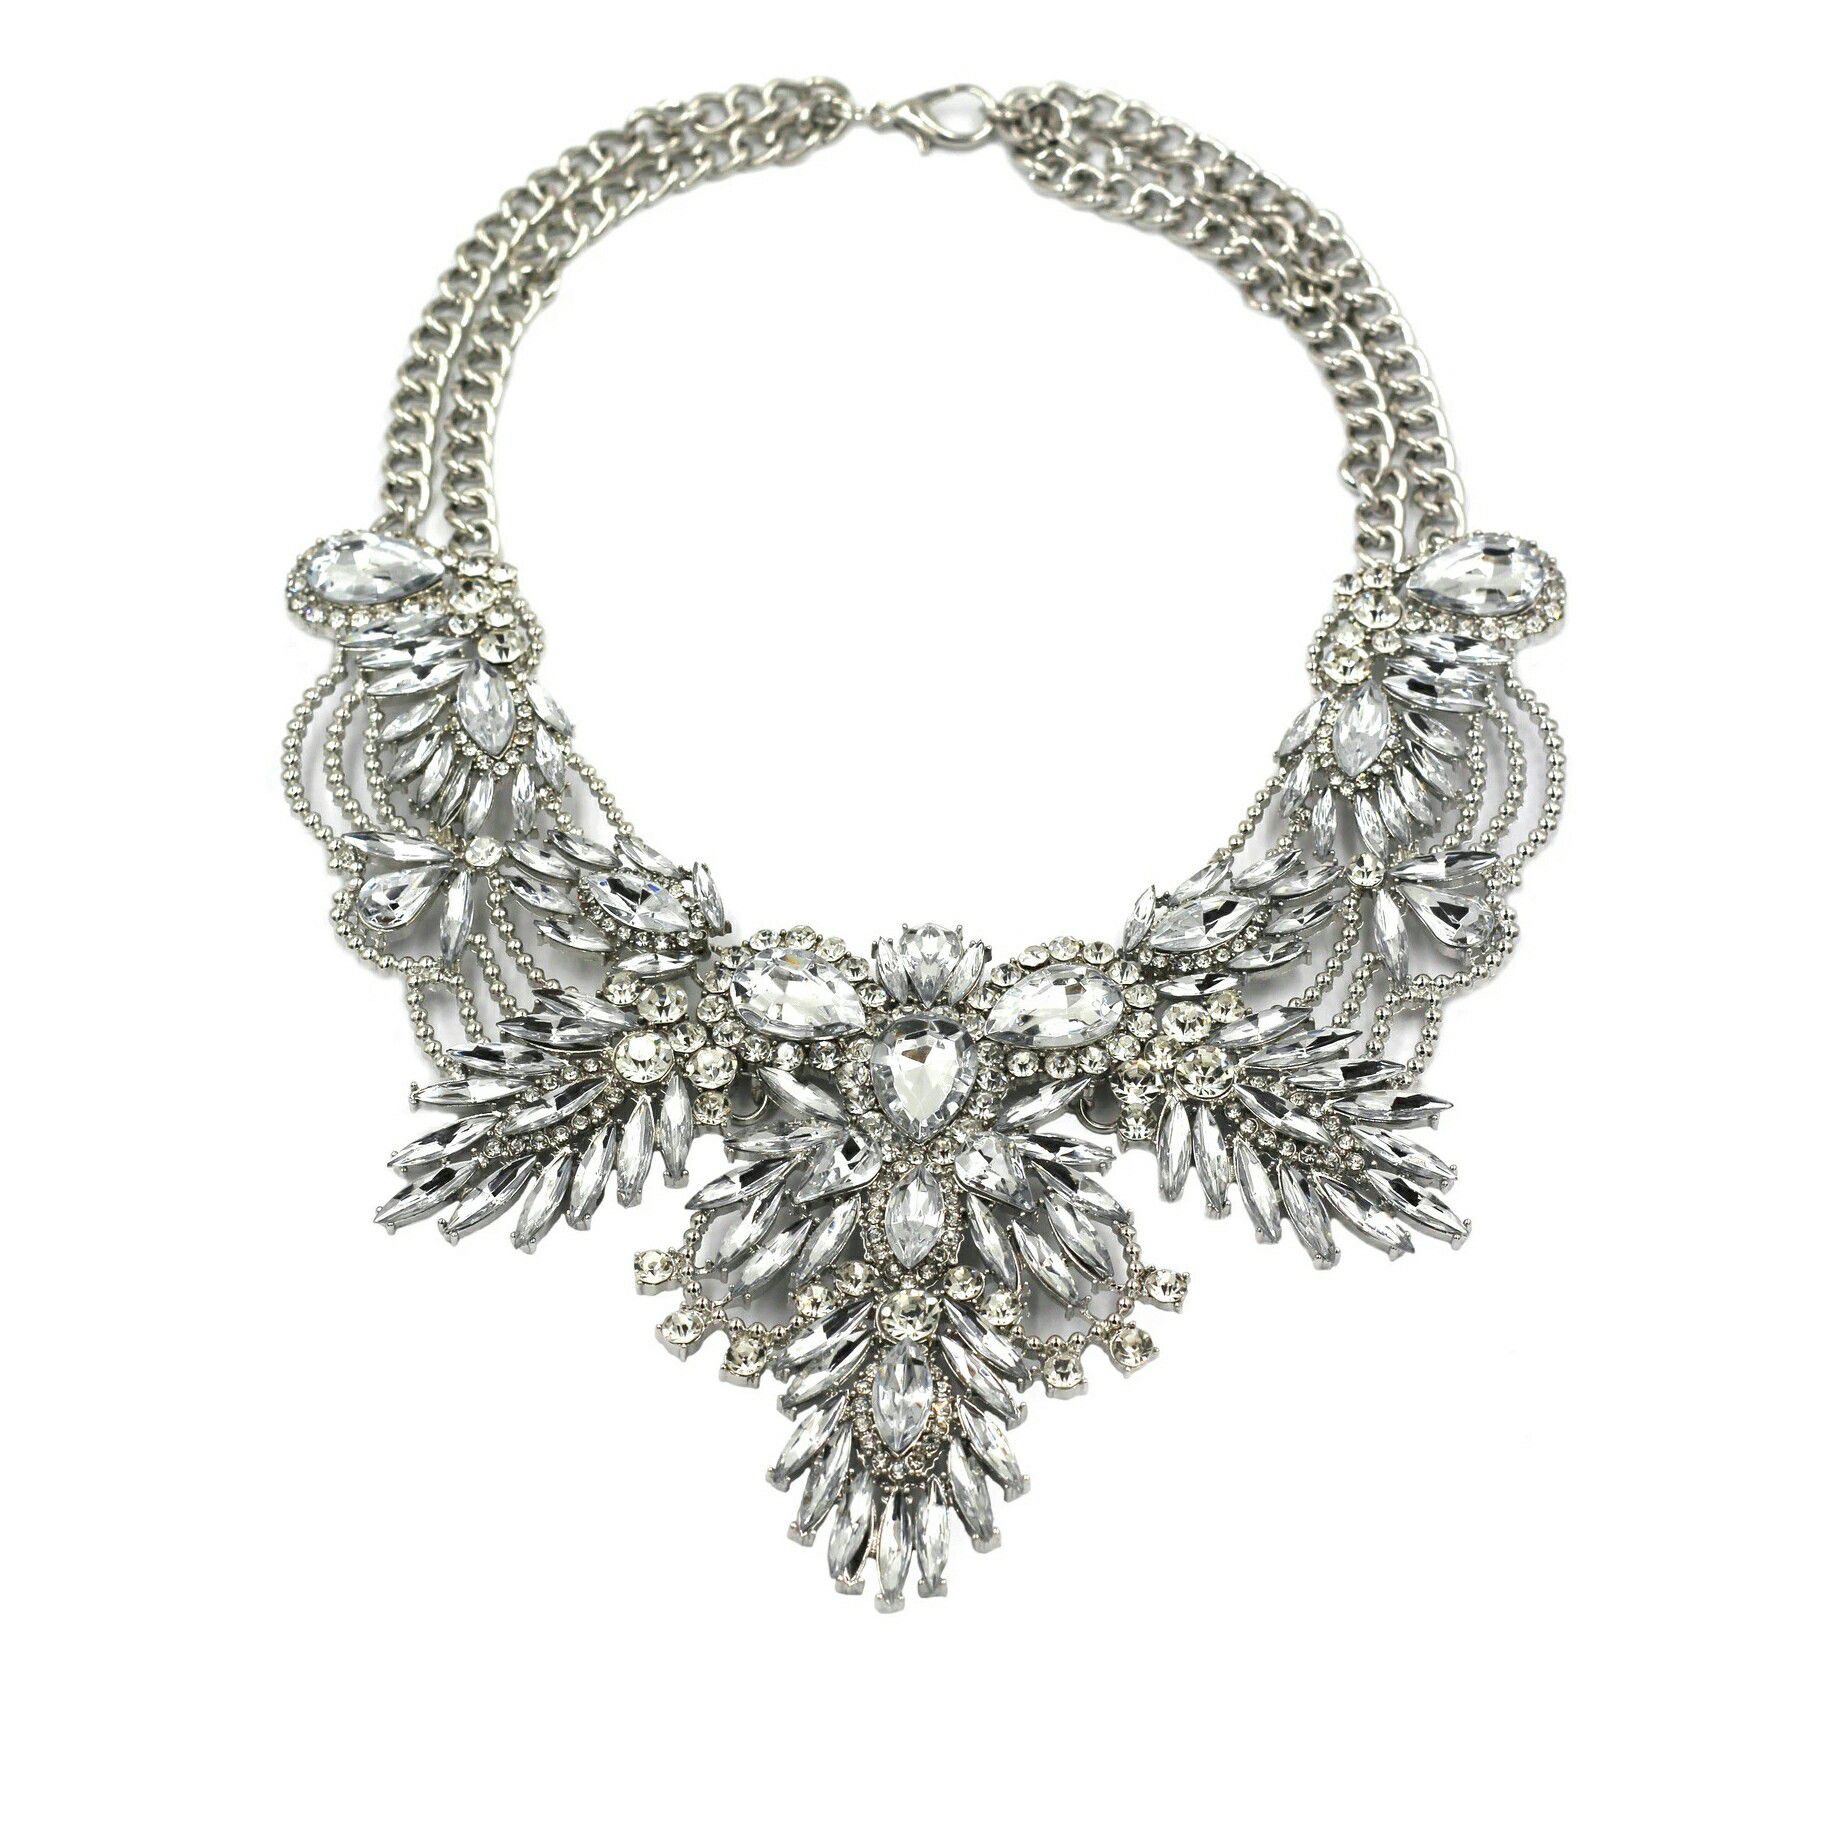 Silver noble granular crystal flower necklace